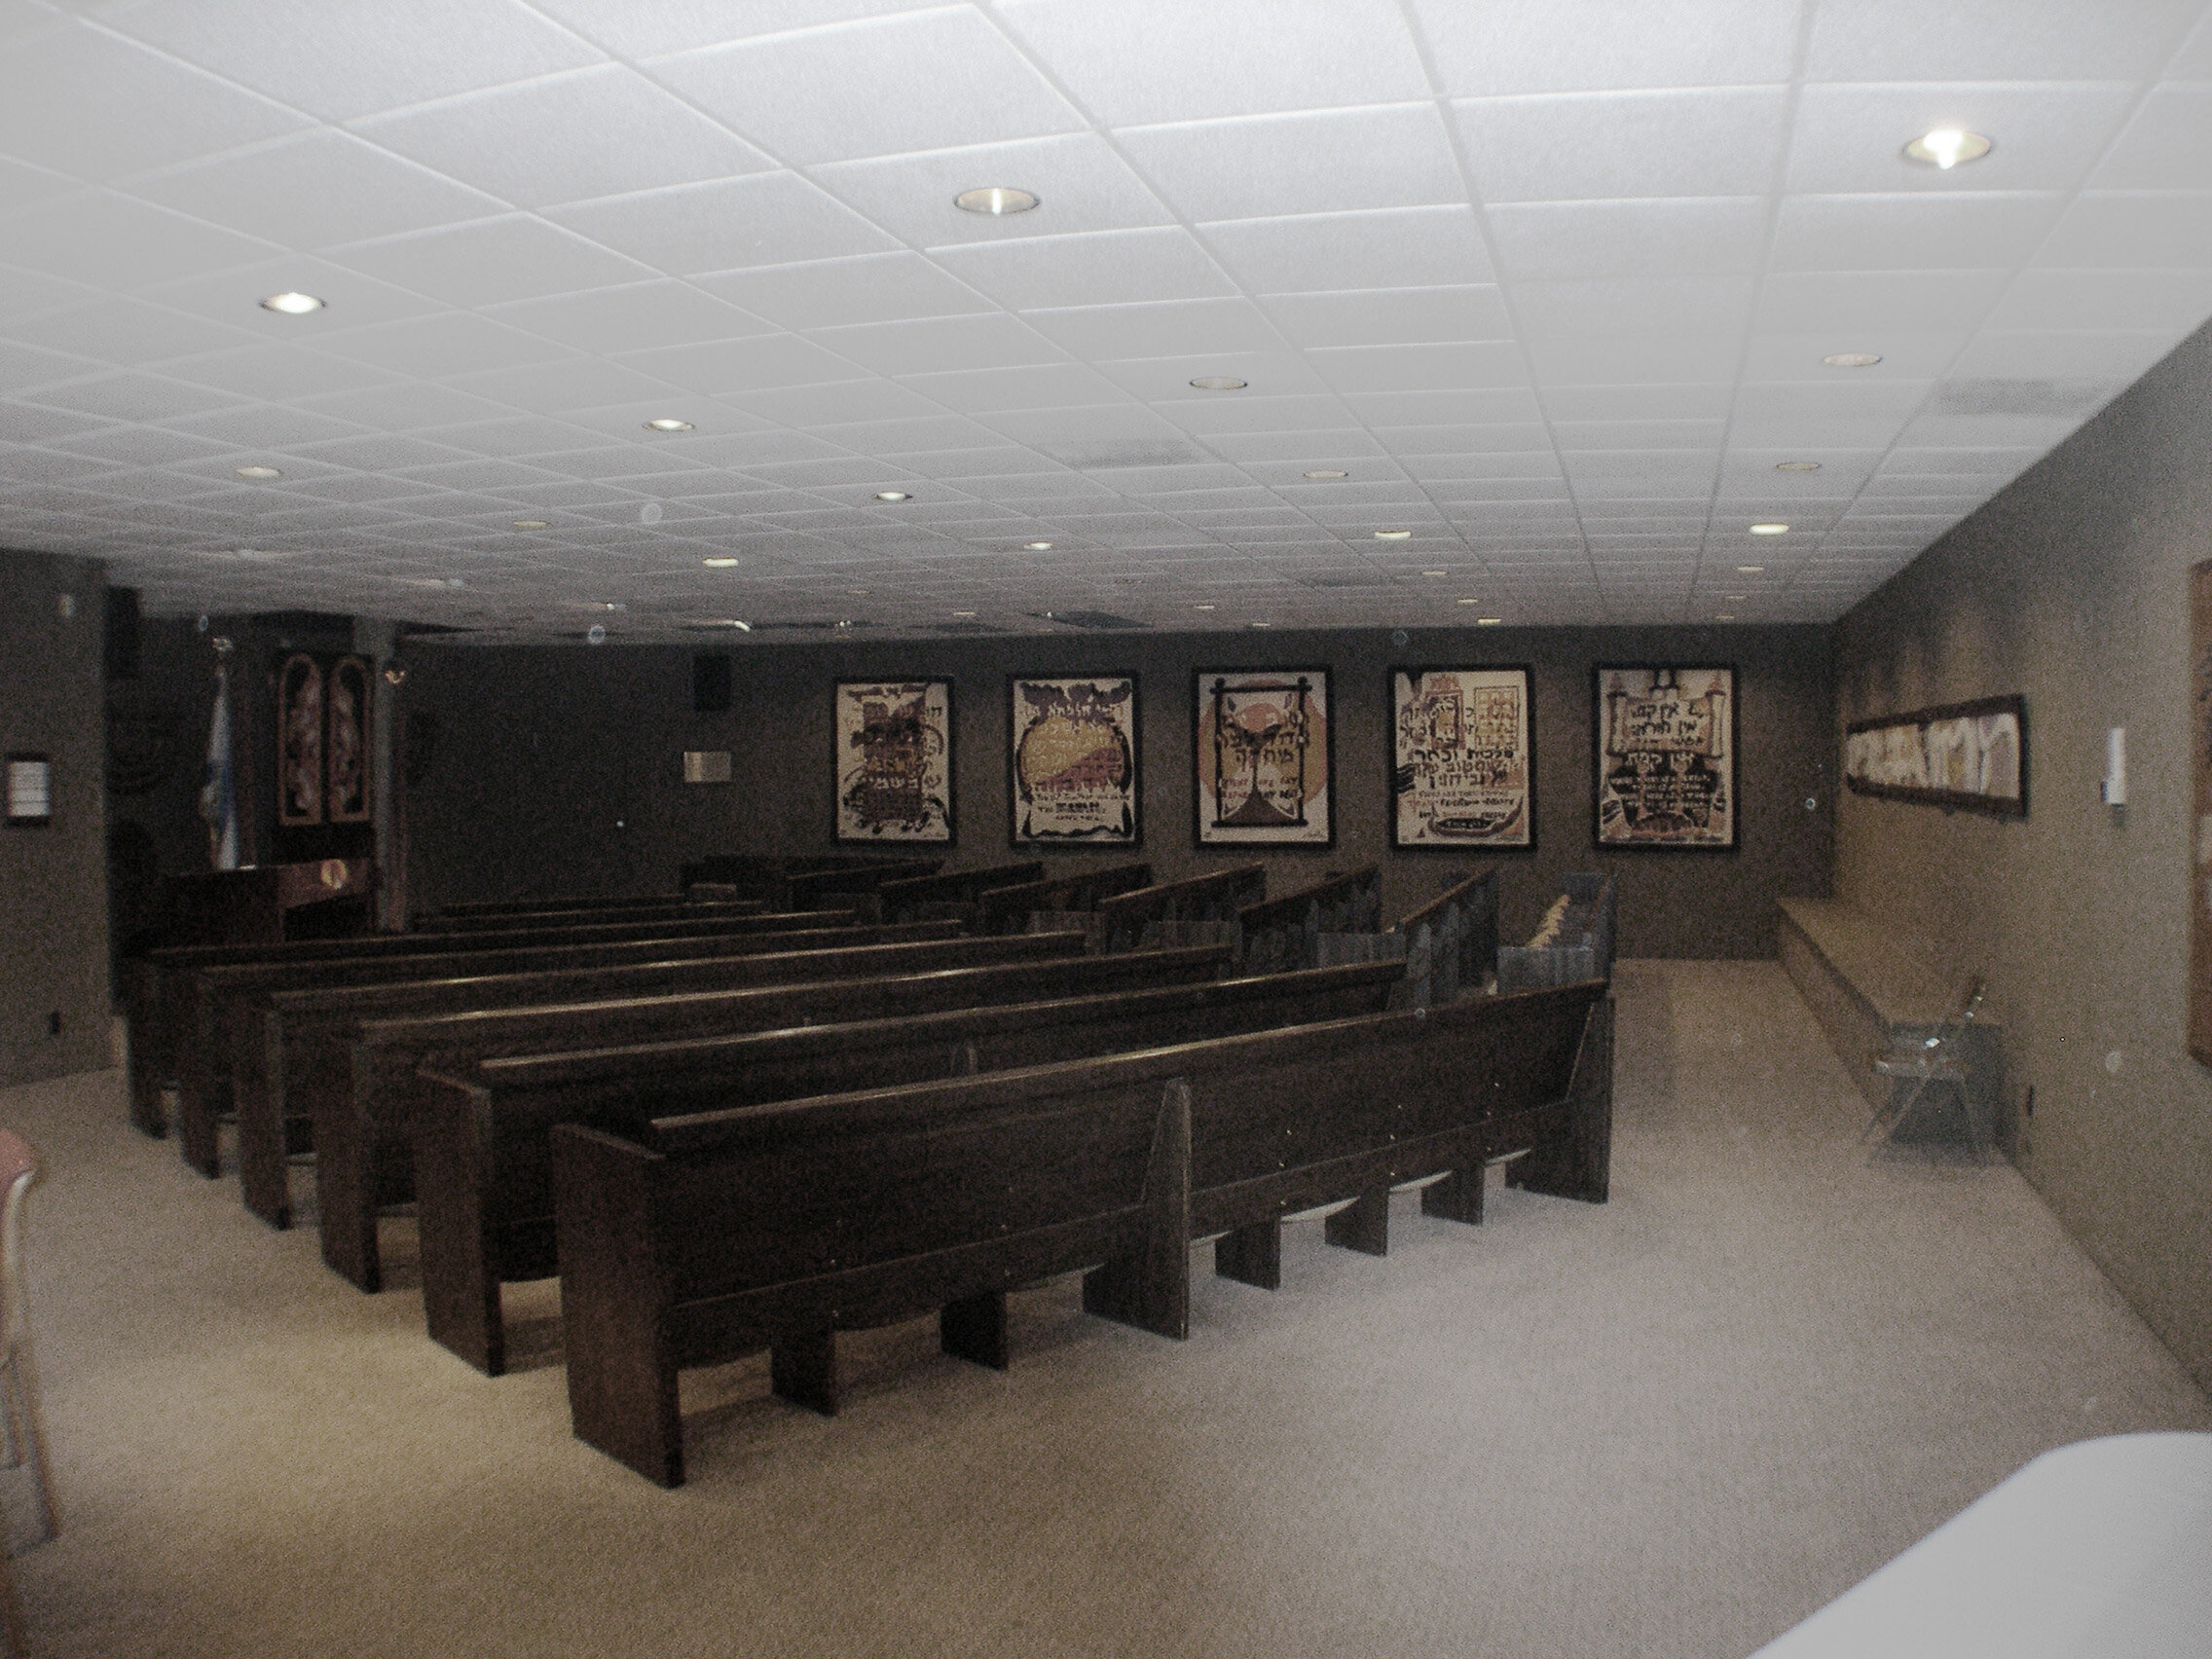 Chapel_interior BW.jpg